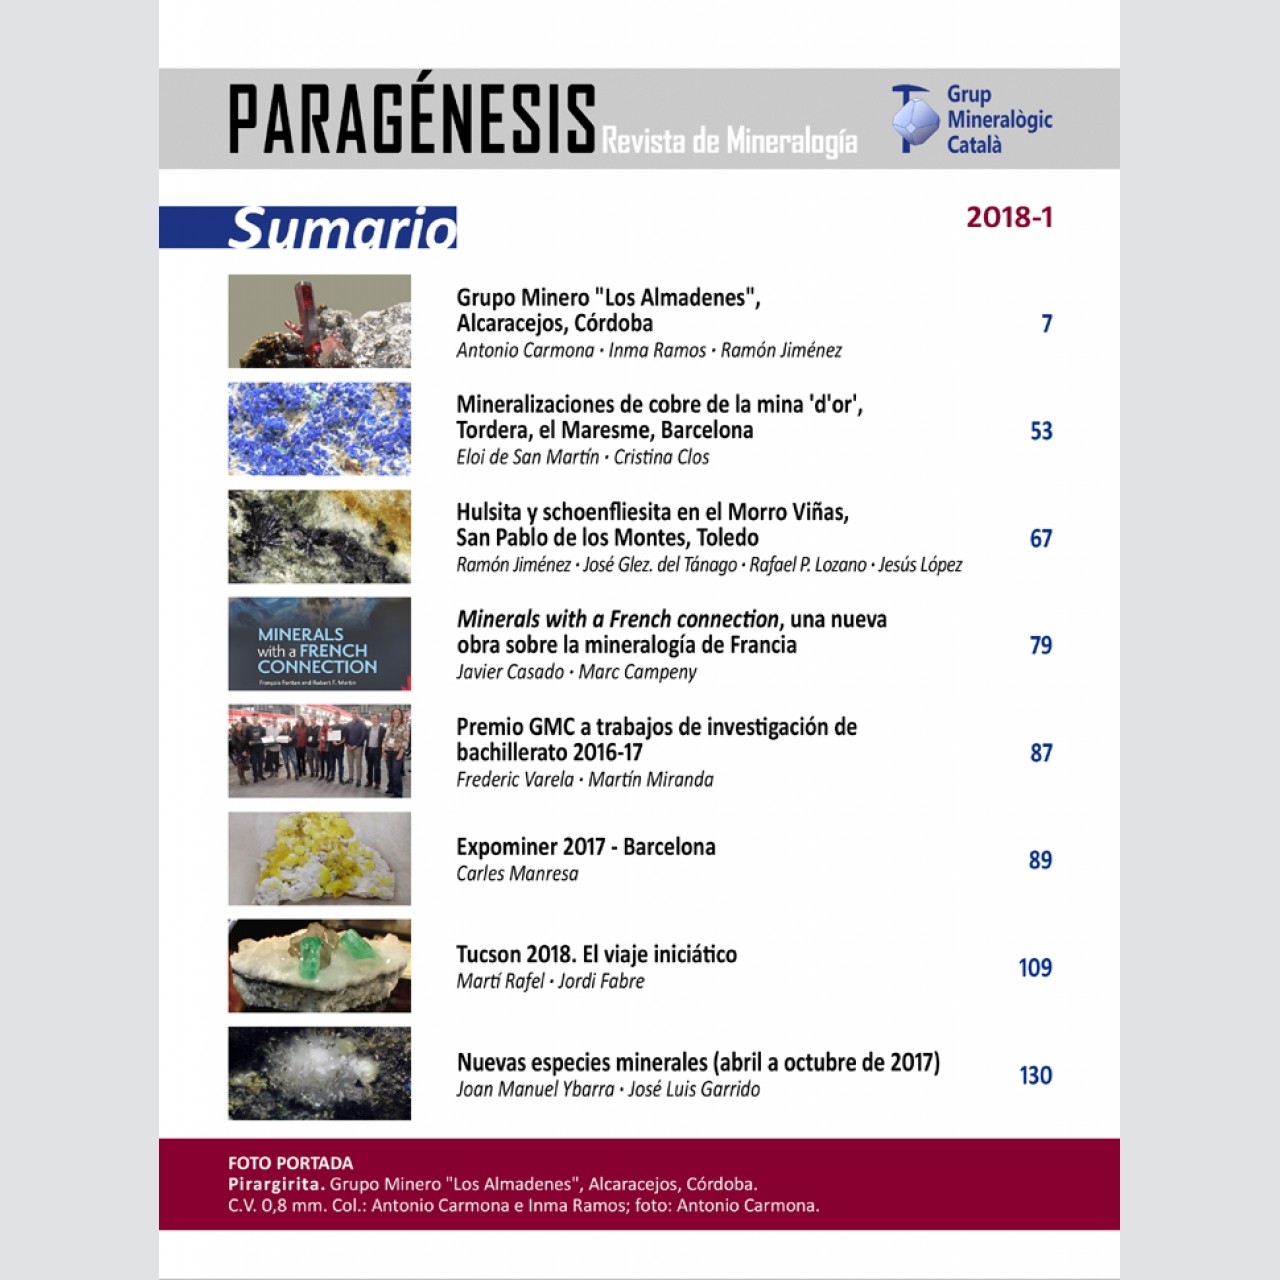 Paragénesis. Revista de Mineralogía (2018-1)